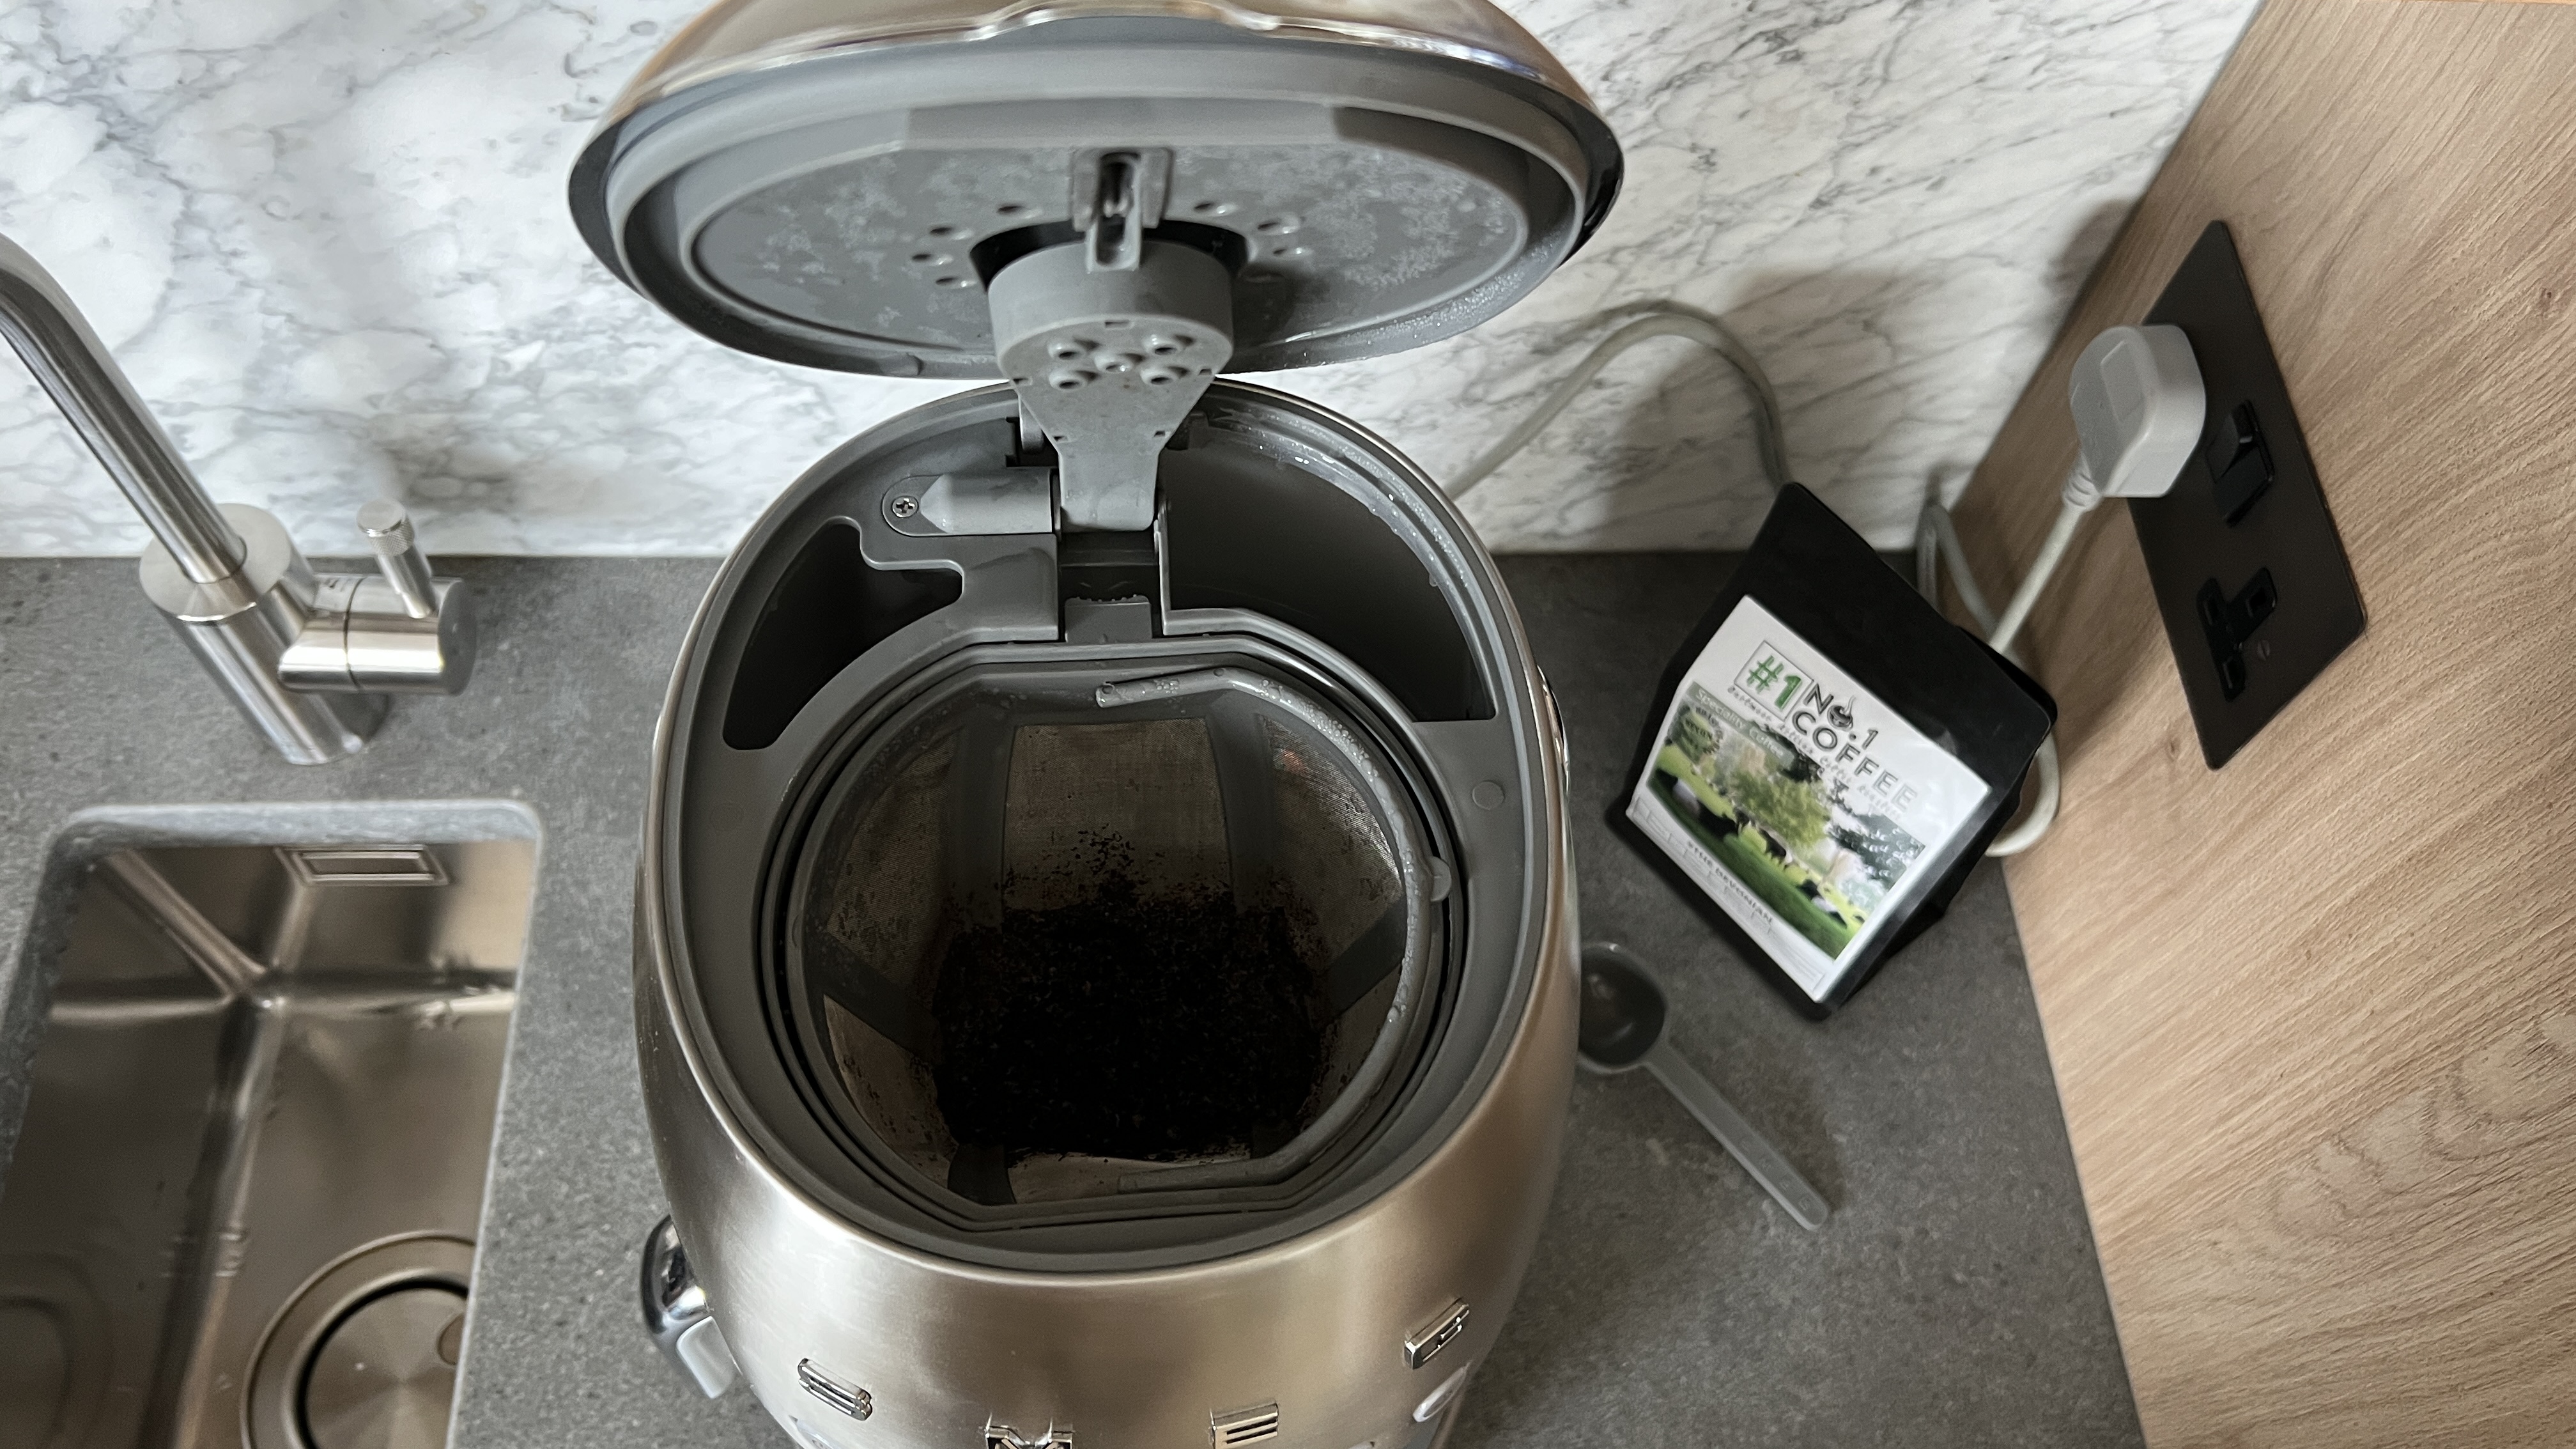 Smeg coffee machine open lid showing grounds basket